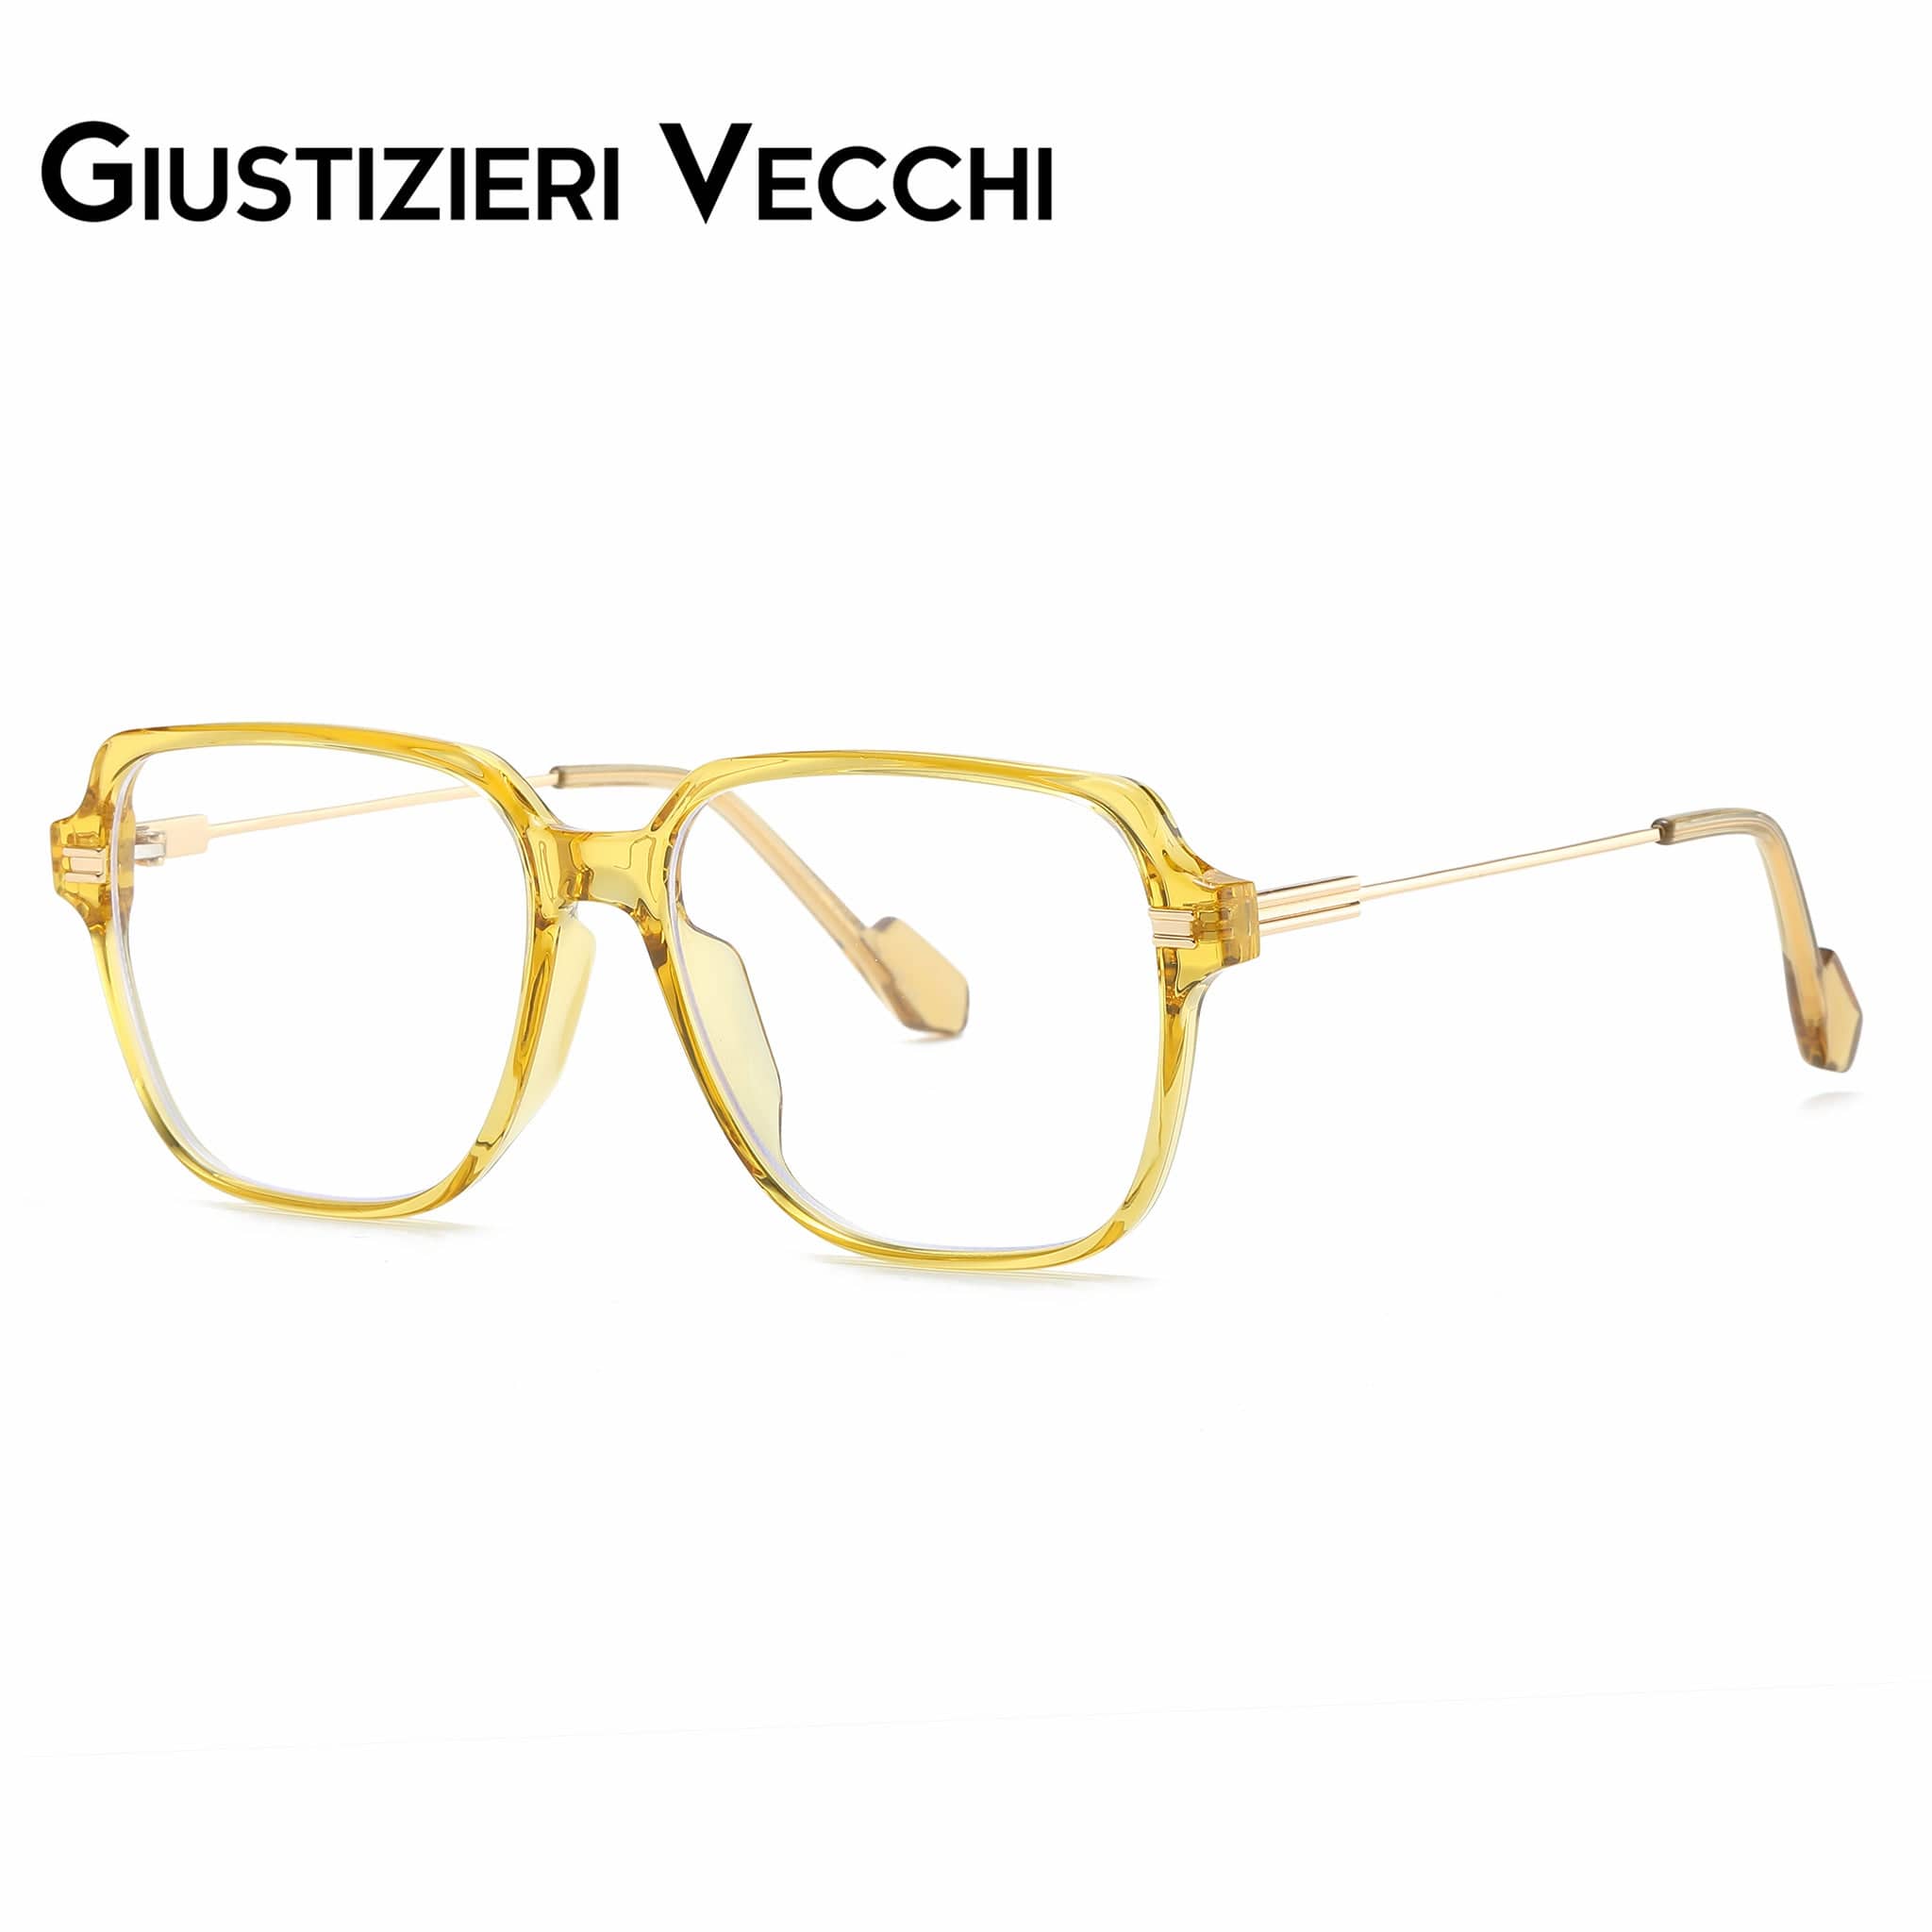 GIUSTIZIERI VECCHI Eyeglasses MysticRider Duo